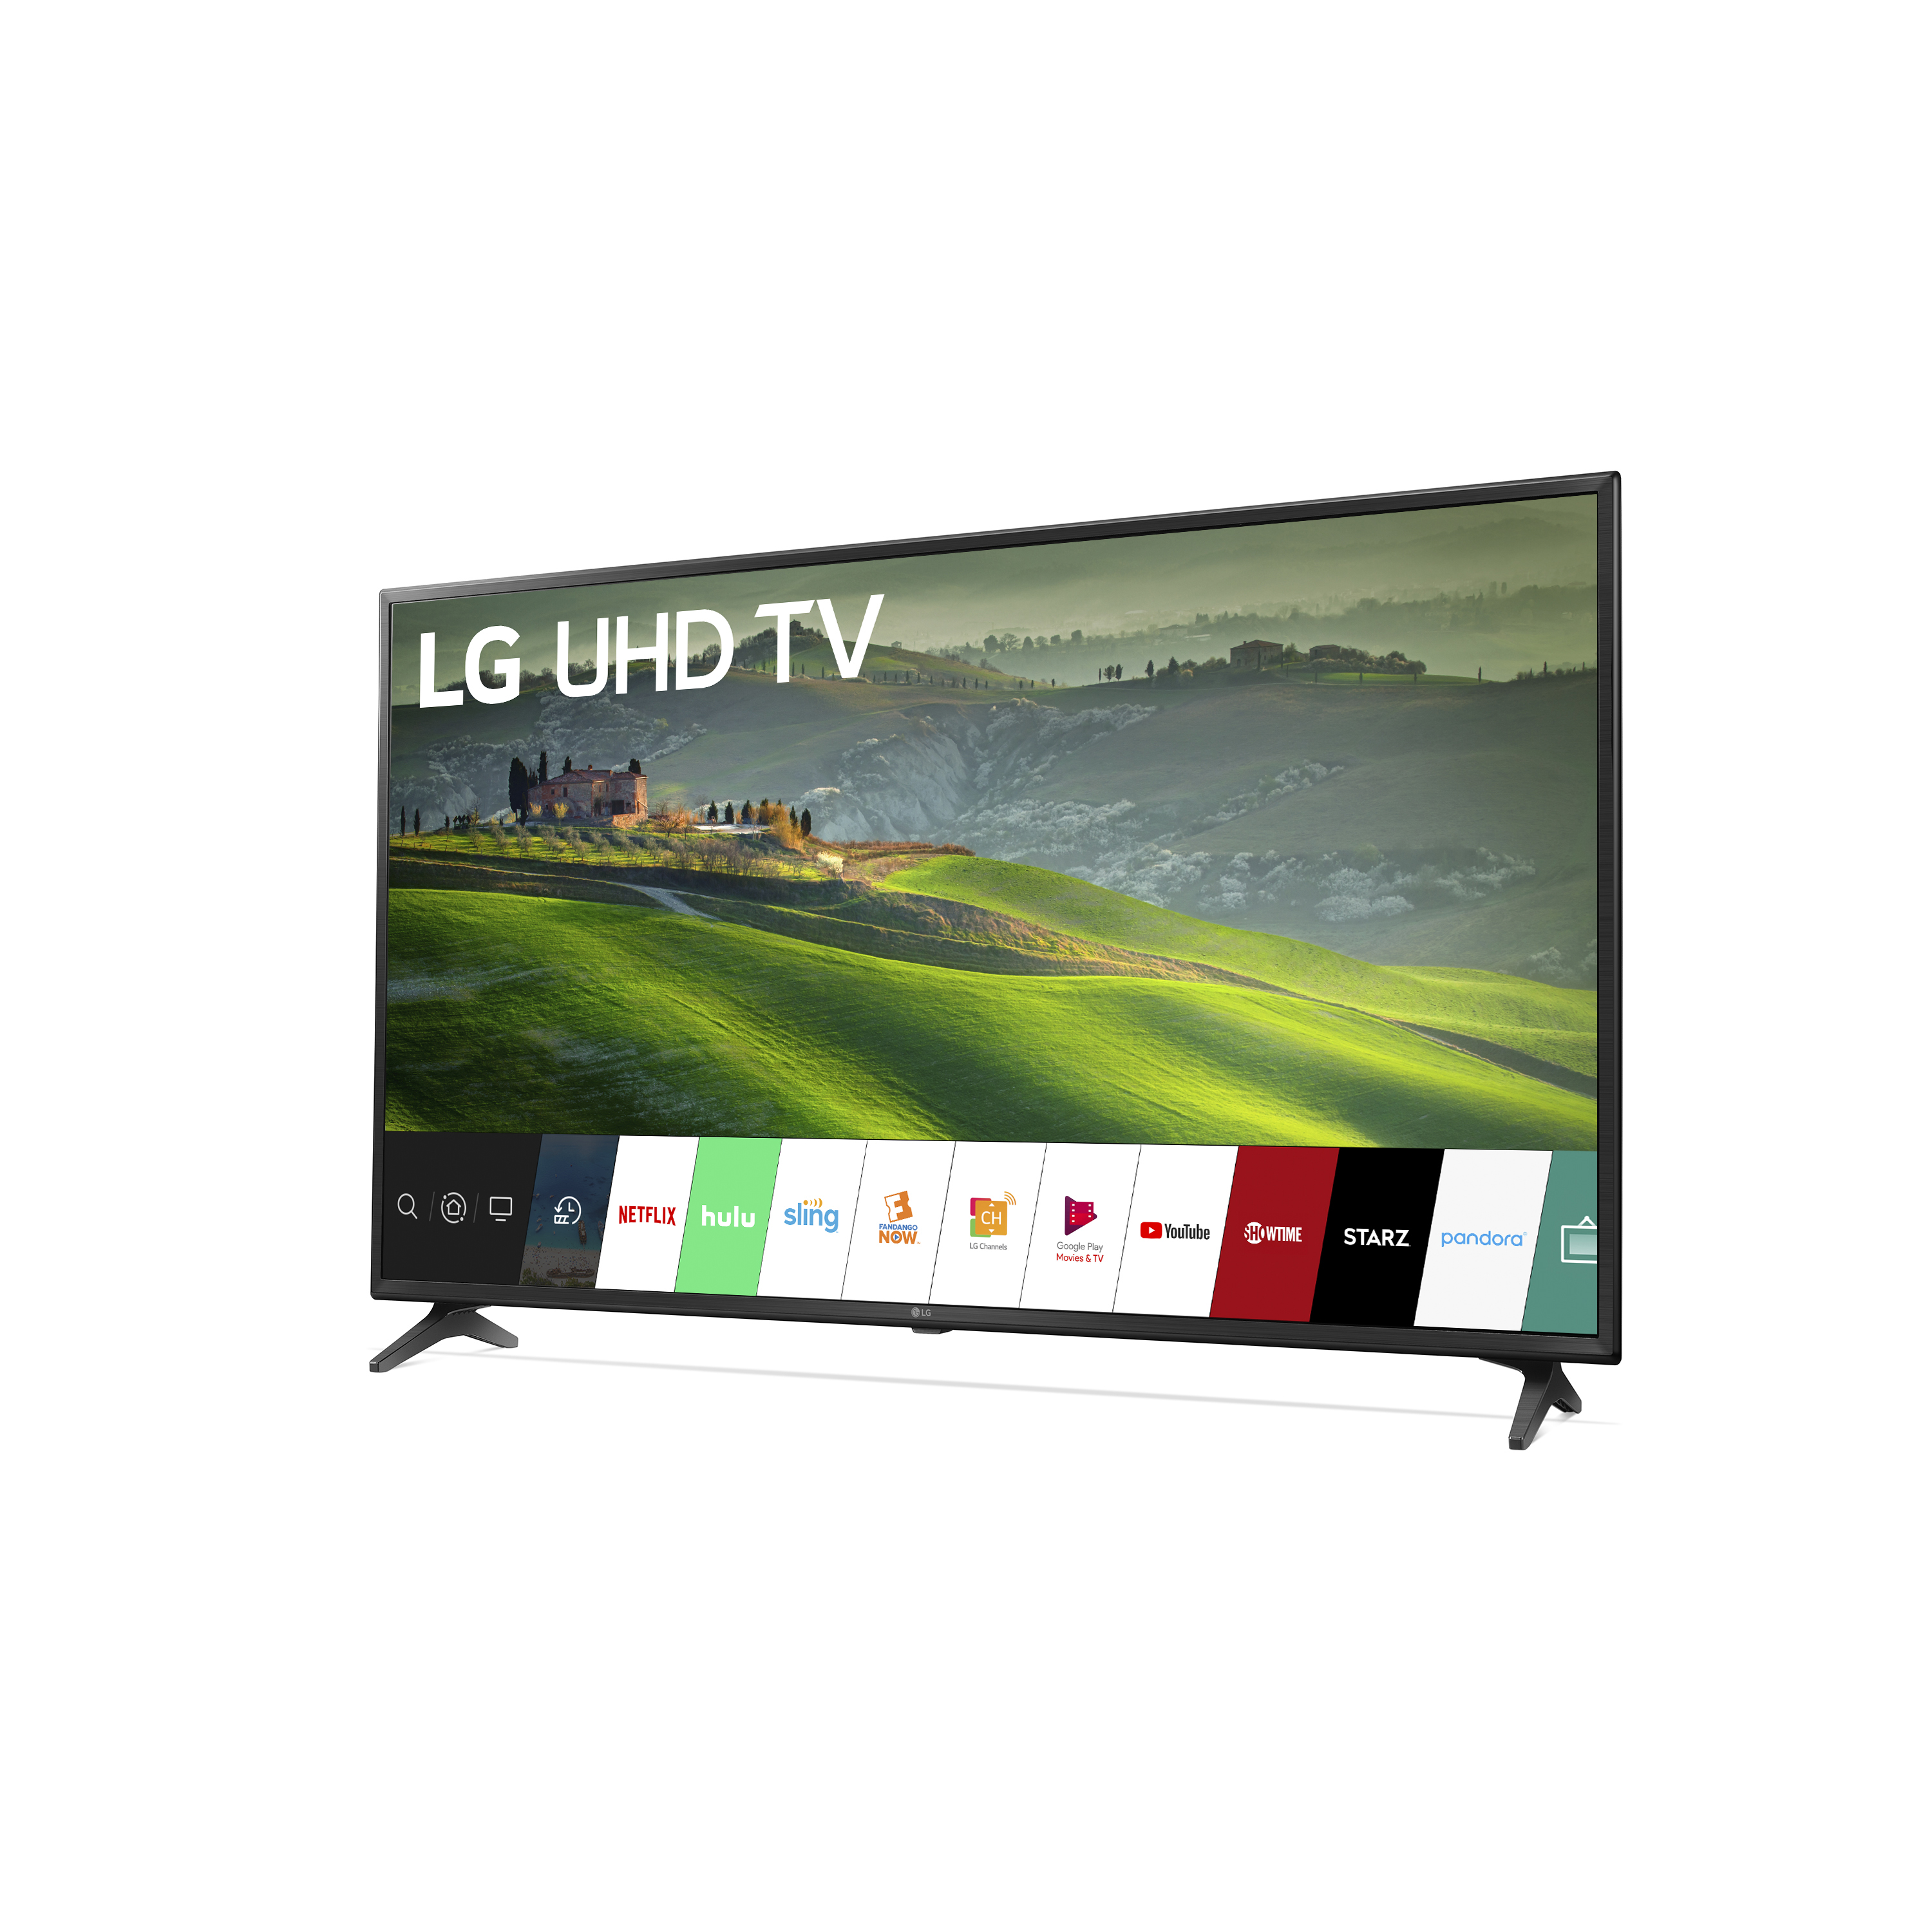 LG 60" Class 4K UHD 2160p LED Smart TV With HDR 60UM6900PUA - image 3 of 14